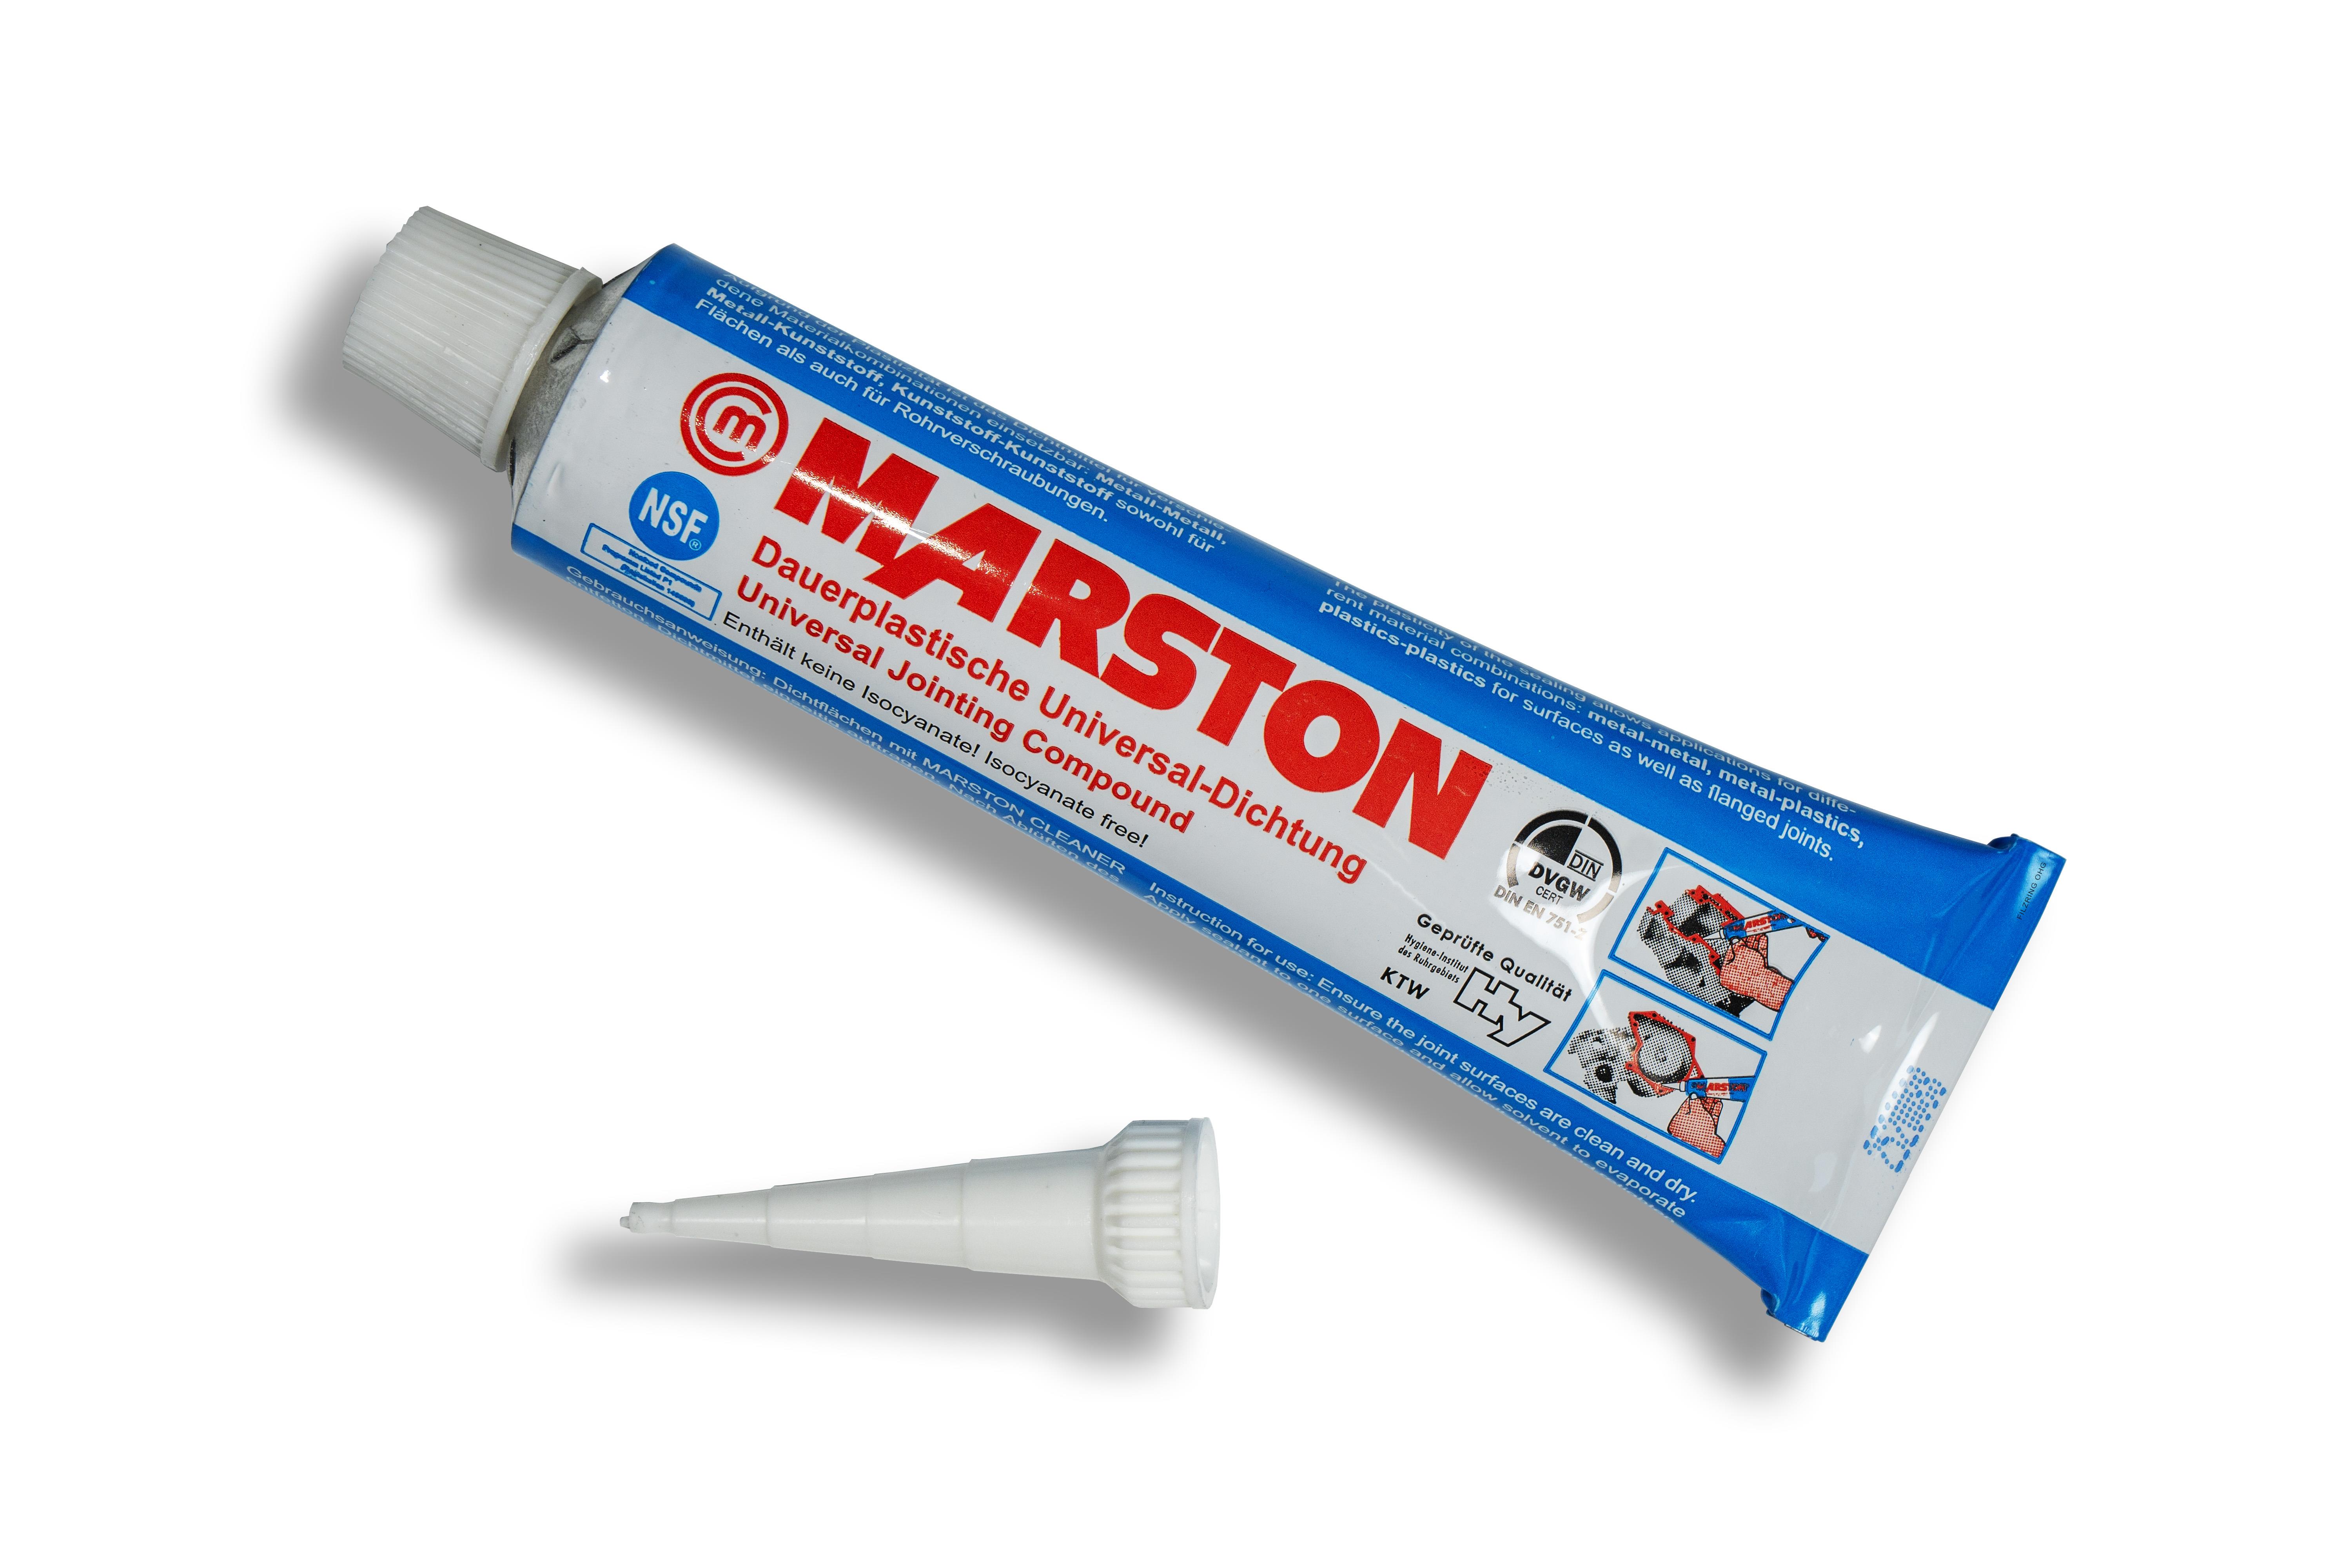 Marston Universal-Dichtung Tube, 85 g Tube, Dichtmassen / Dichtmittel, Alle Produkte